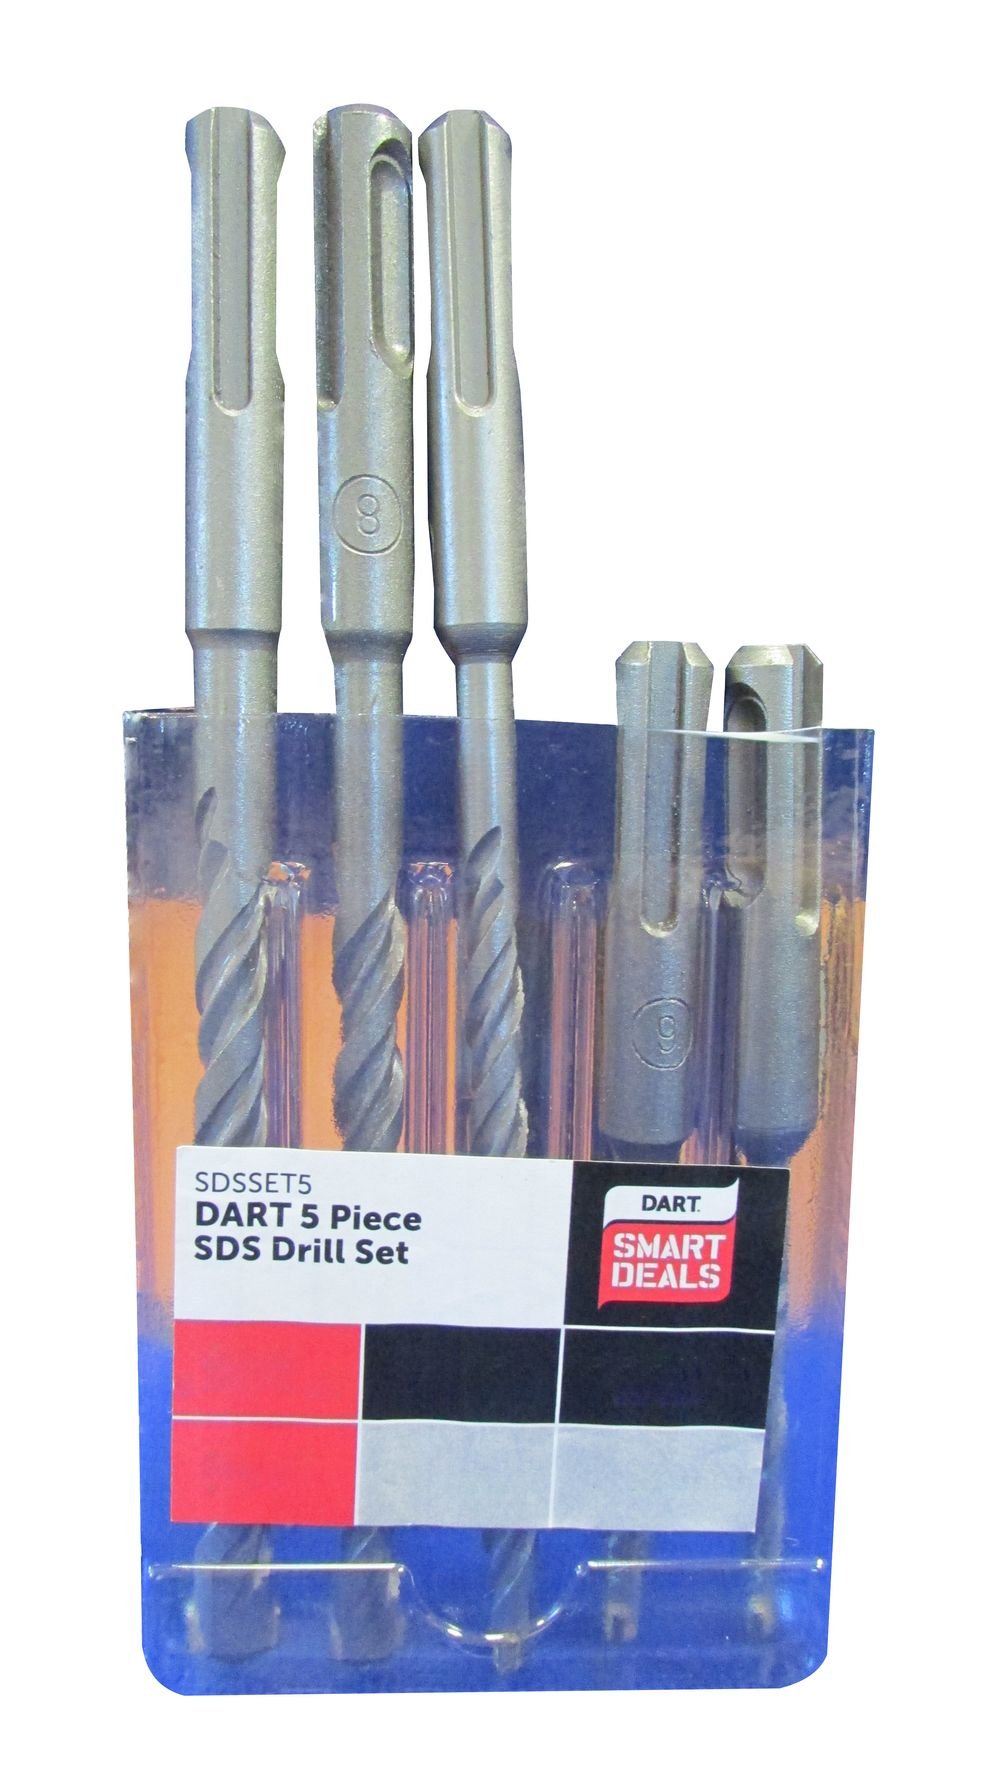 Dart 5 Piece SDS Drill Set